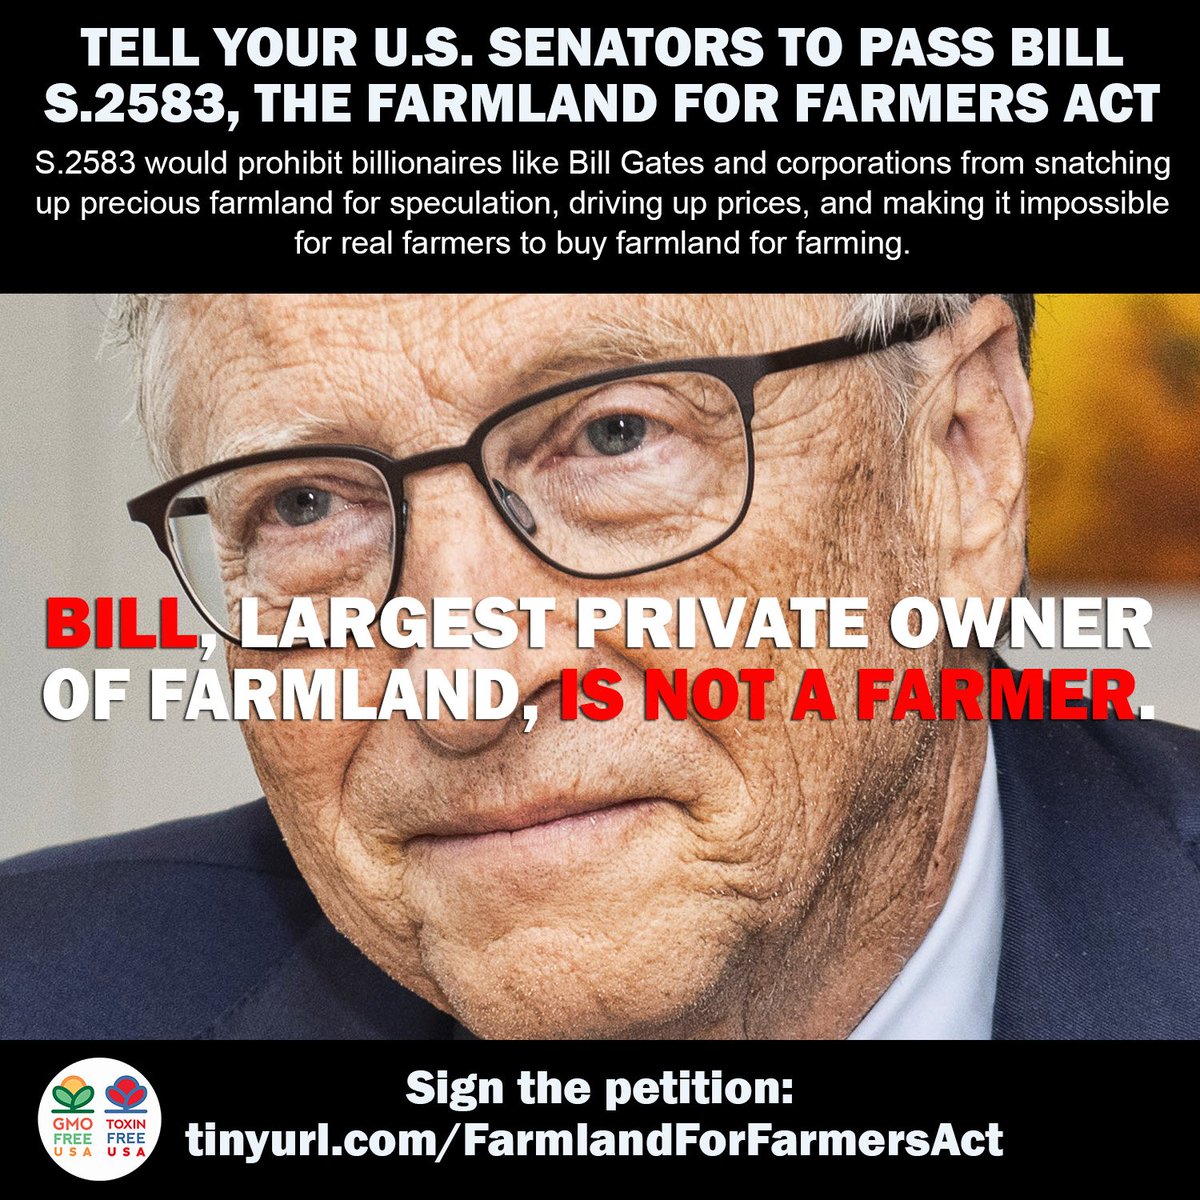 Stop Bill Gates and Other Corporate Investors from Gobbling Up U.S. Farmland. Protect Family Farms! Tell your U.S. Senators to support Senate Bill S.2583, the Farmland for Farmers Act: tinyurl.com/FarmlandForFar…